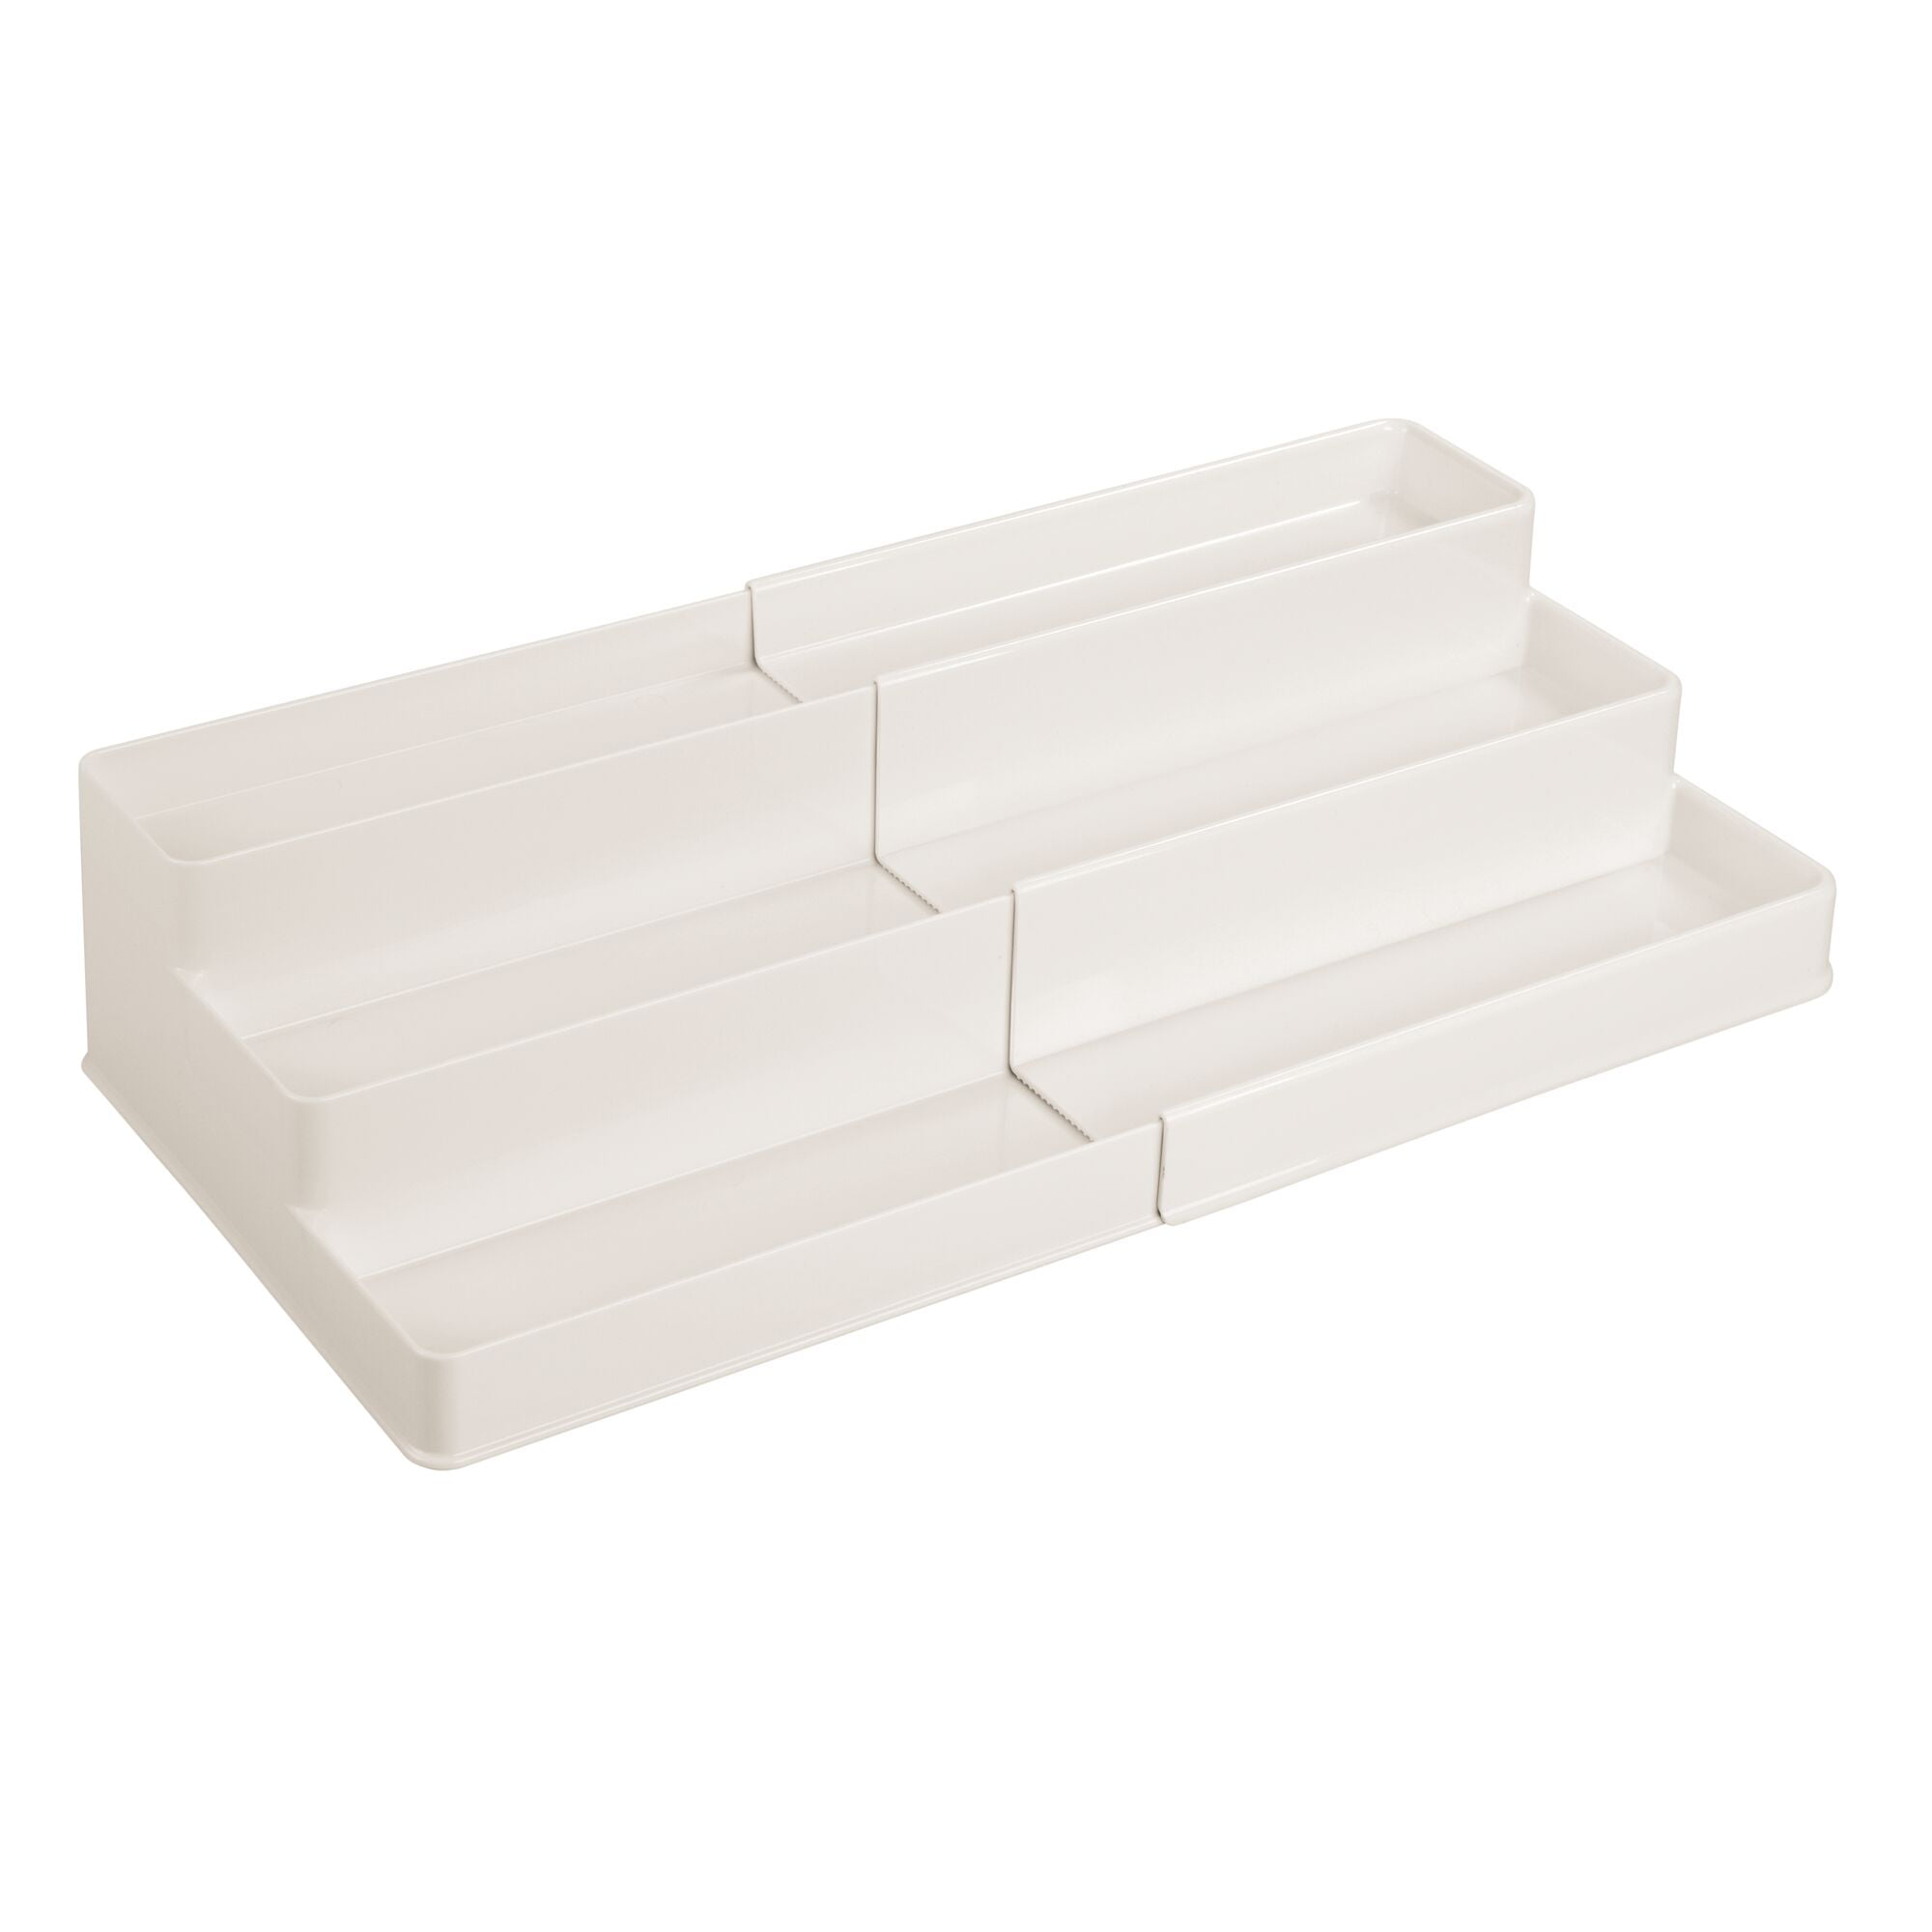 mDesign Large Adjustable, Expandable Plastic Vitamin Rack Storage Organizer  Tray for Bathroom Vanity, Countertop, Cabinet - 3 Step Shelves - Holds